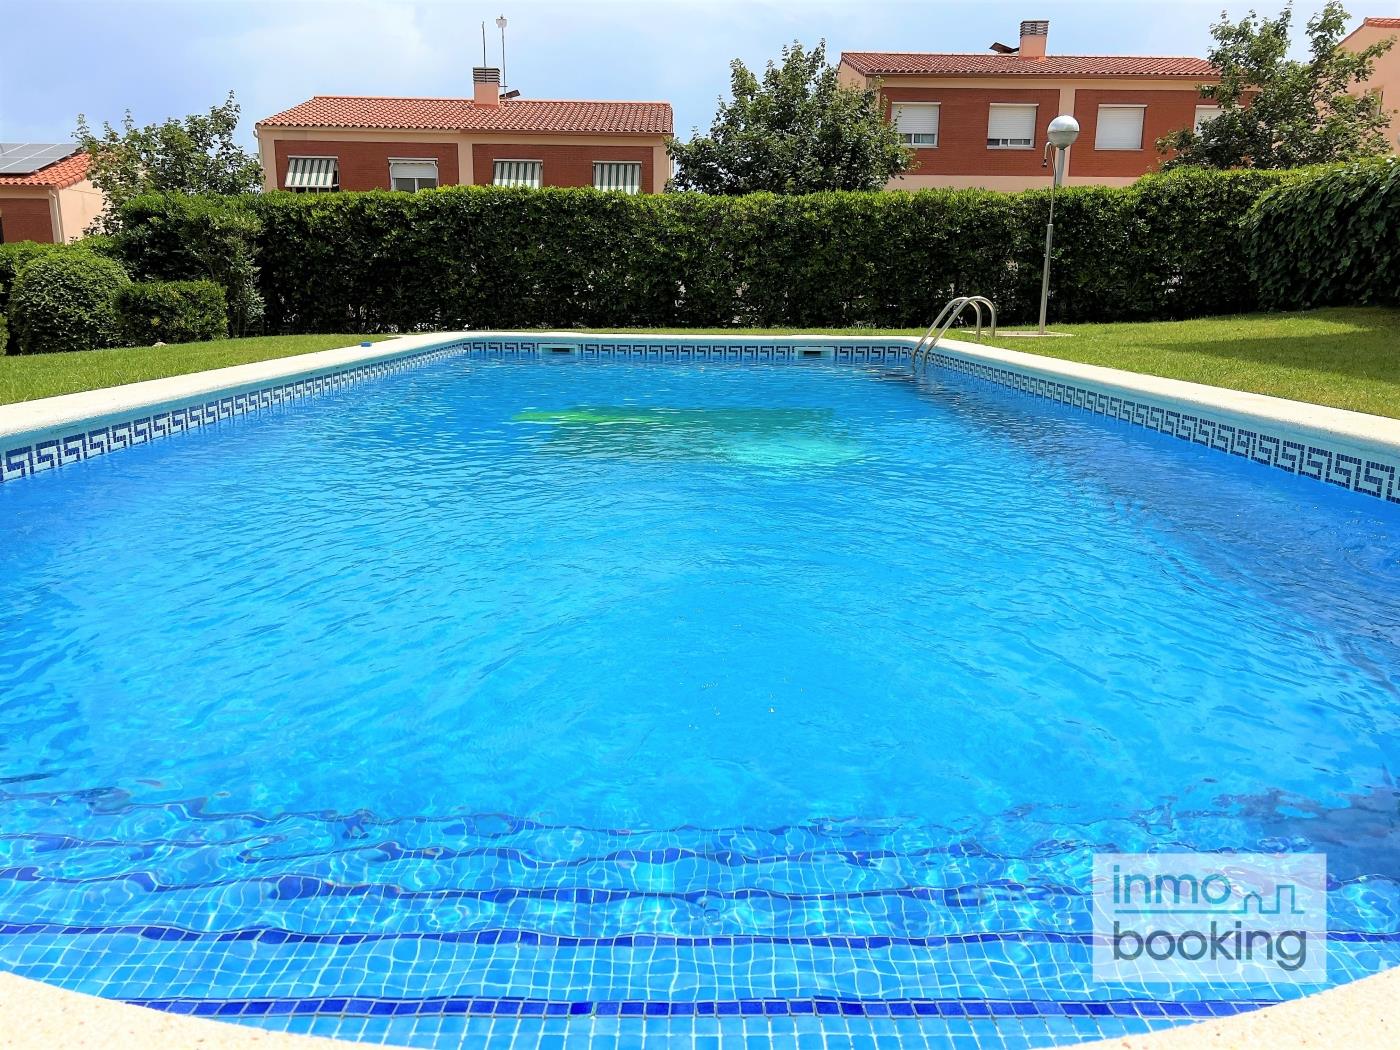 InmoBooking Ático Green Residencial con piscina y barbacoa in Salou